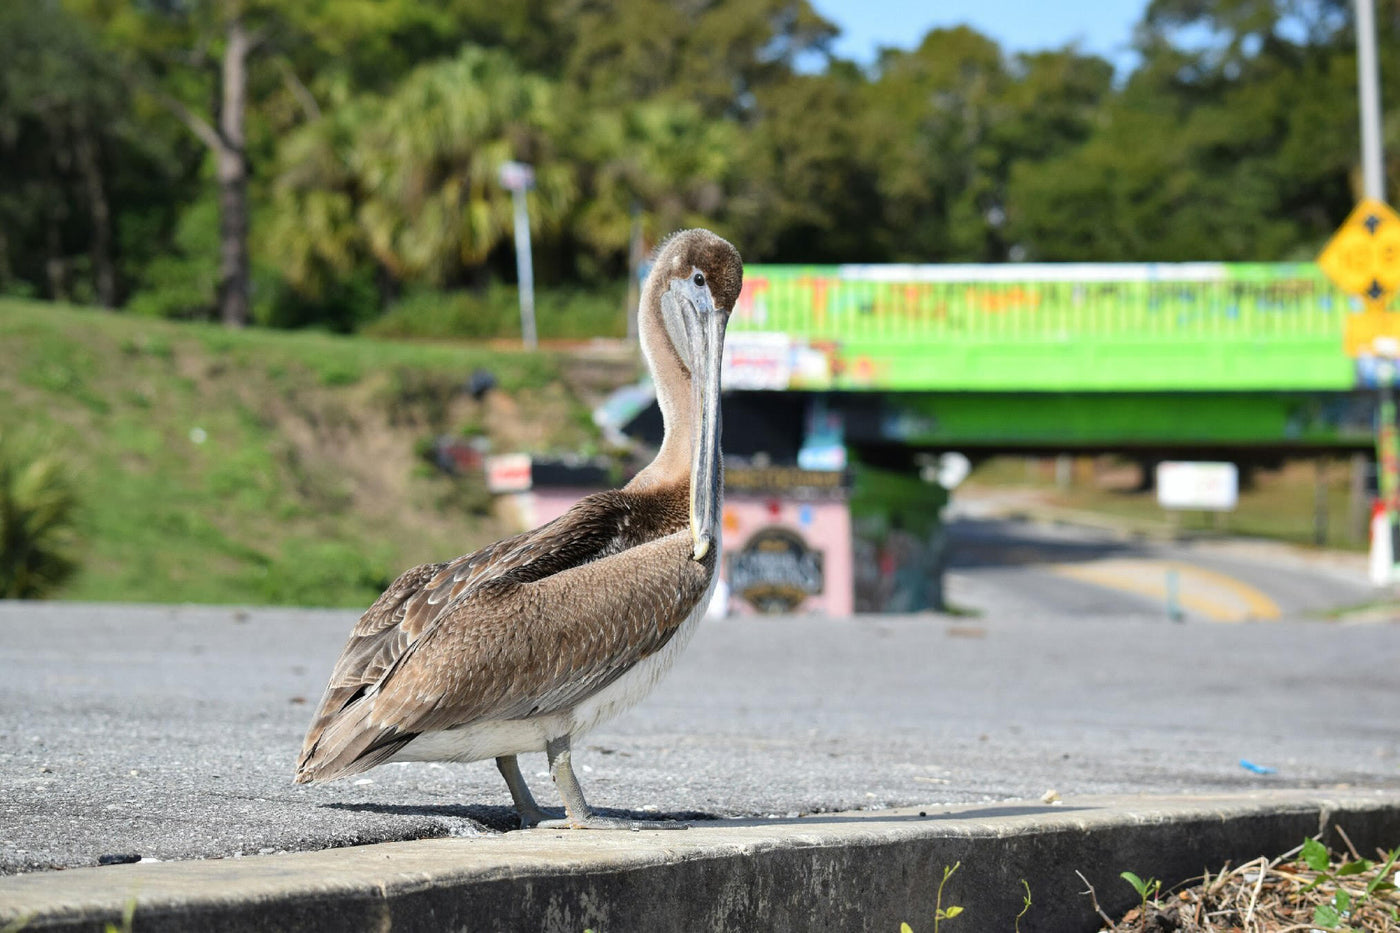 Take a walk on the "wild side." Wildlife at the Graffiti Bridge